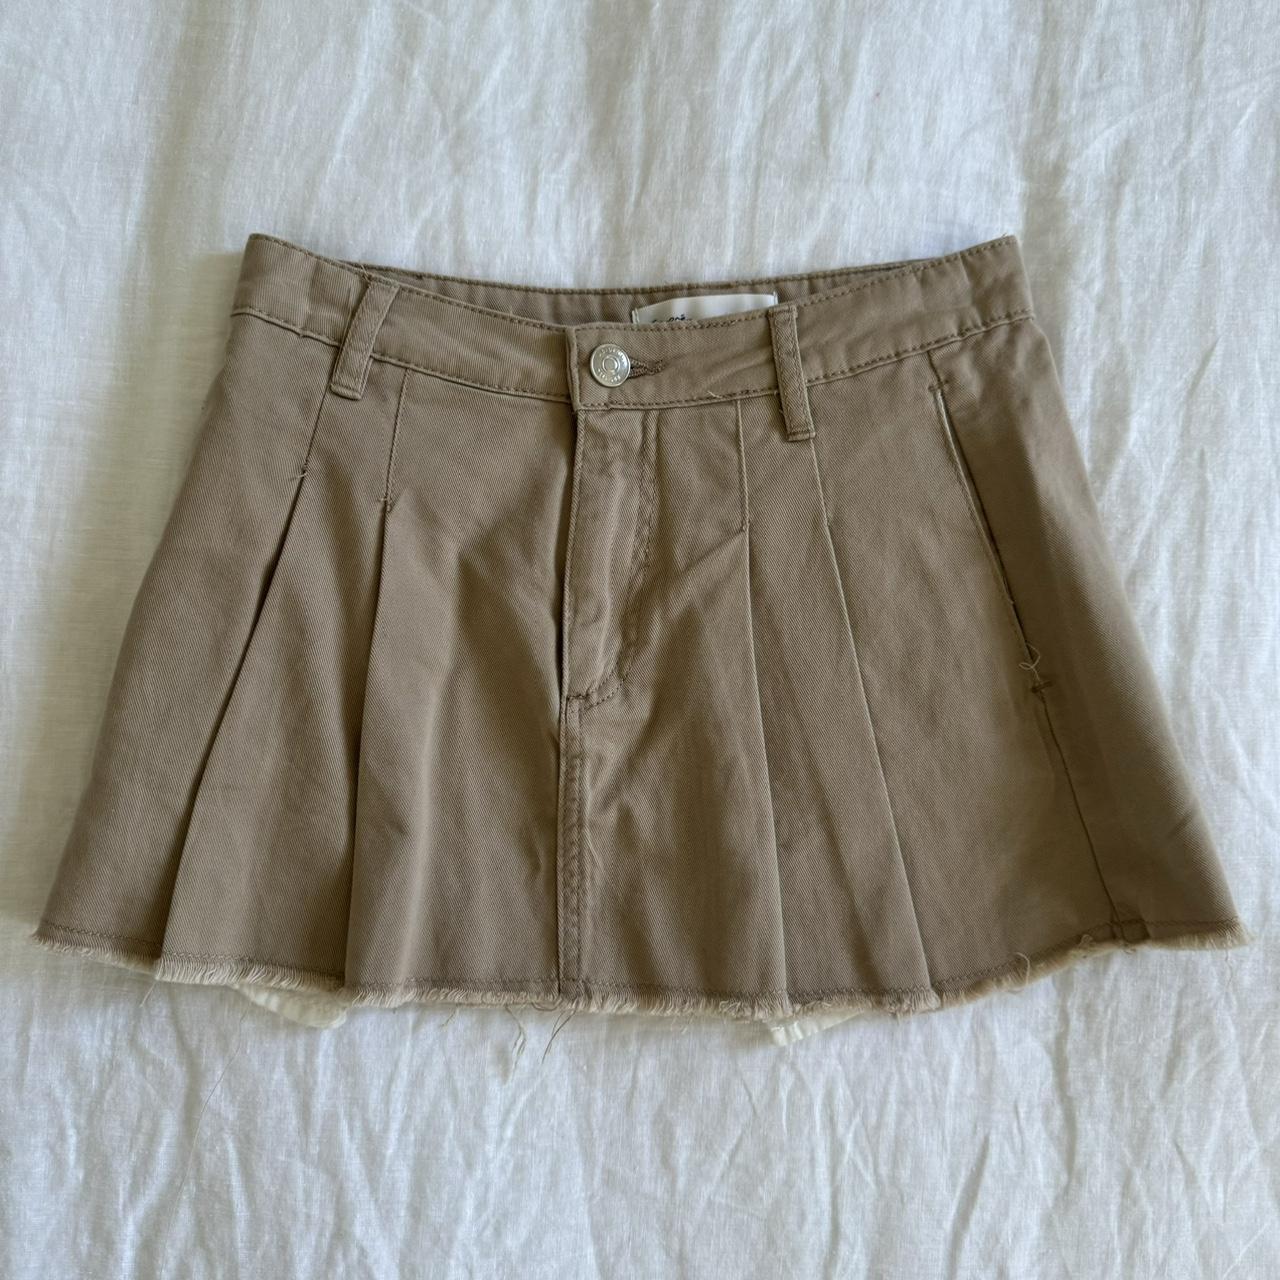 super cargo style skirt - size 6 - SUPER short... - Depop